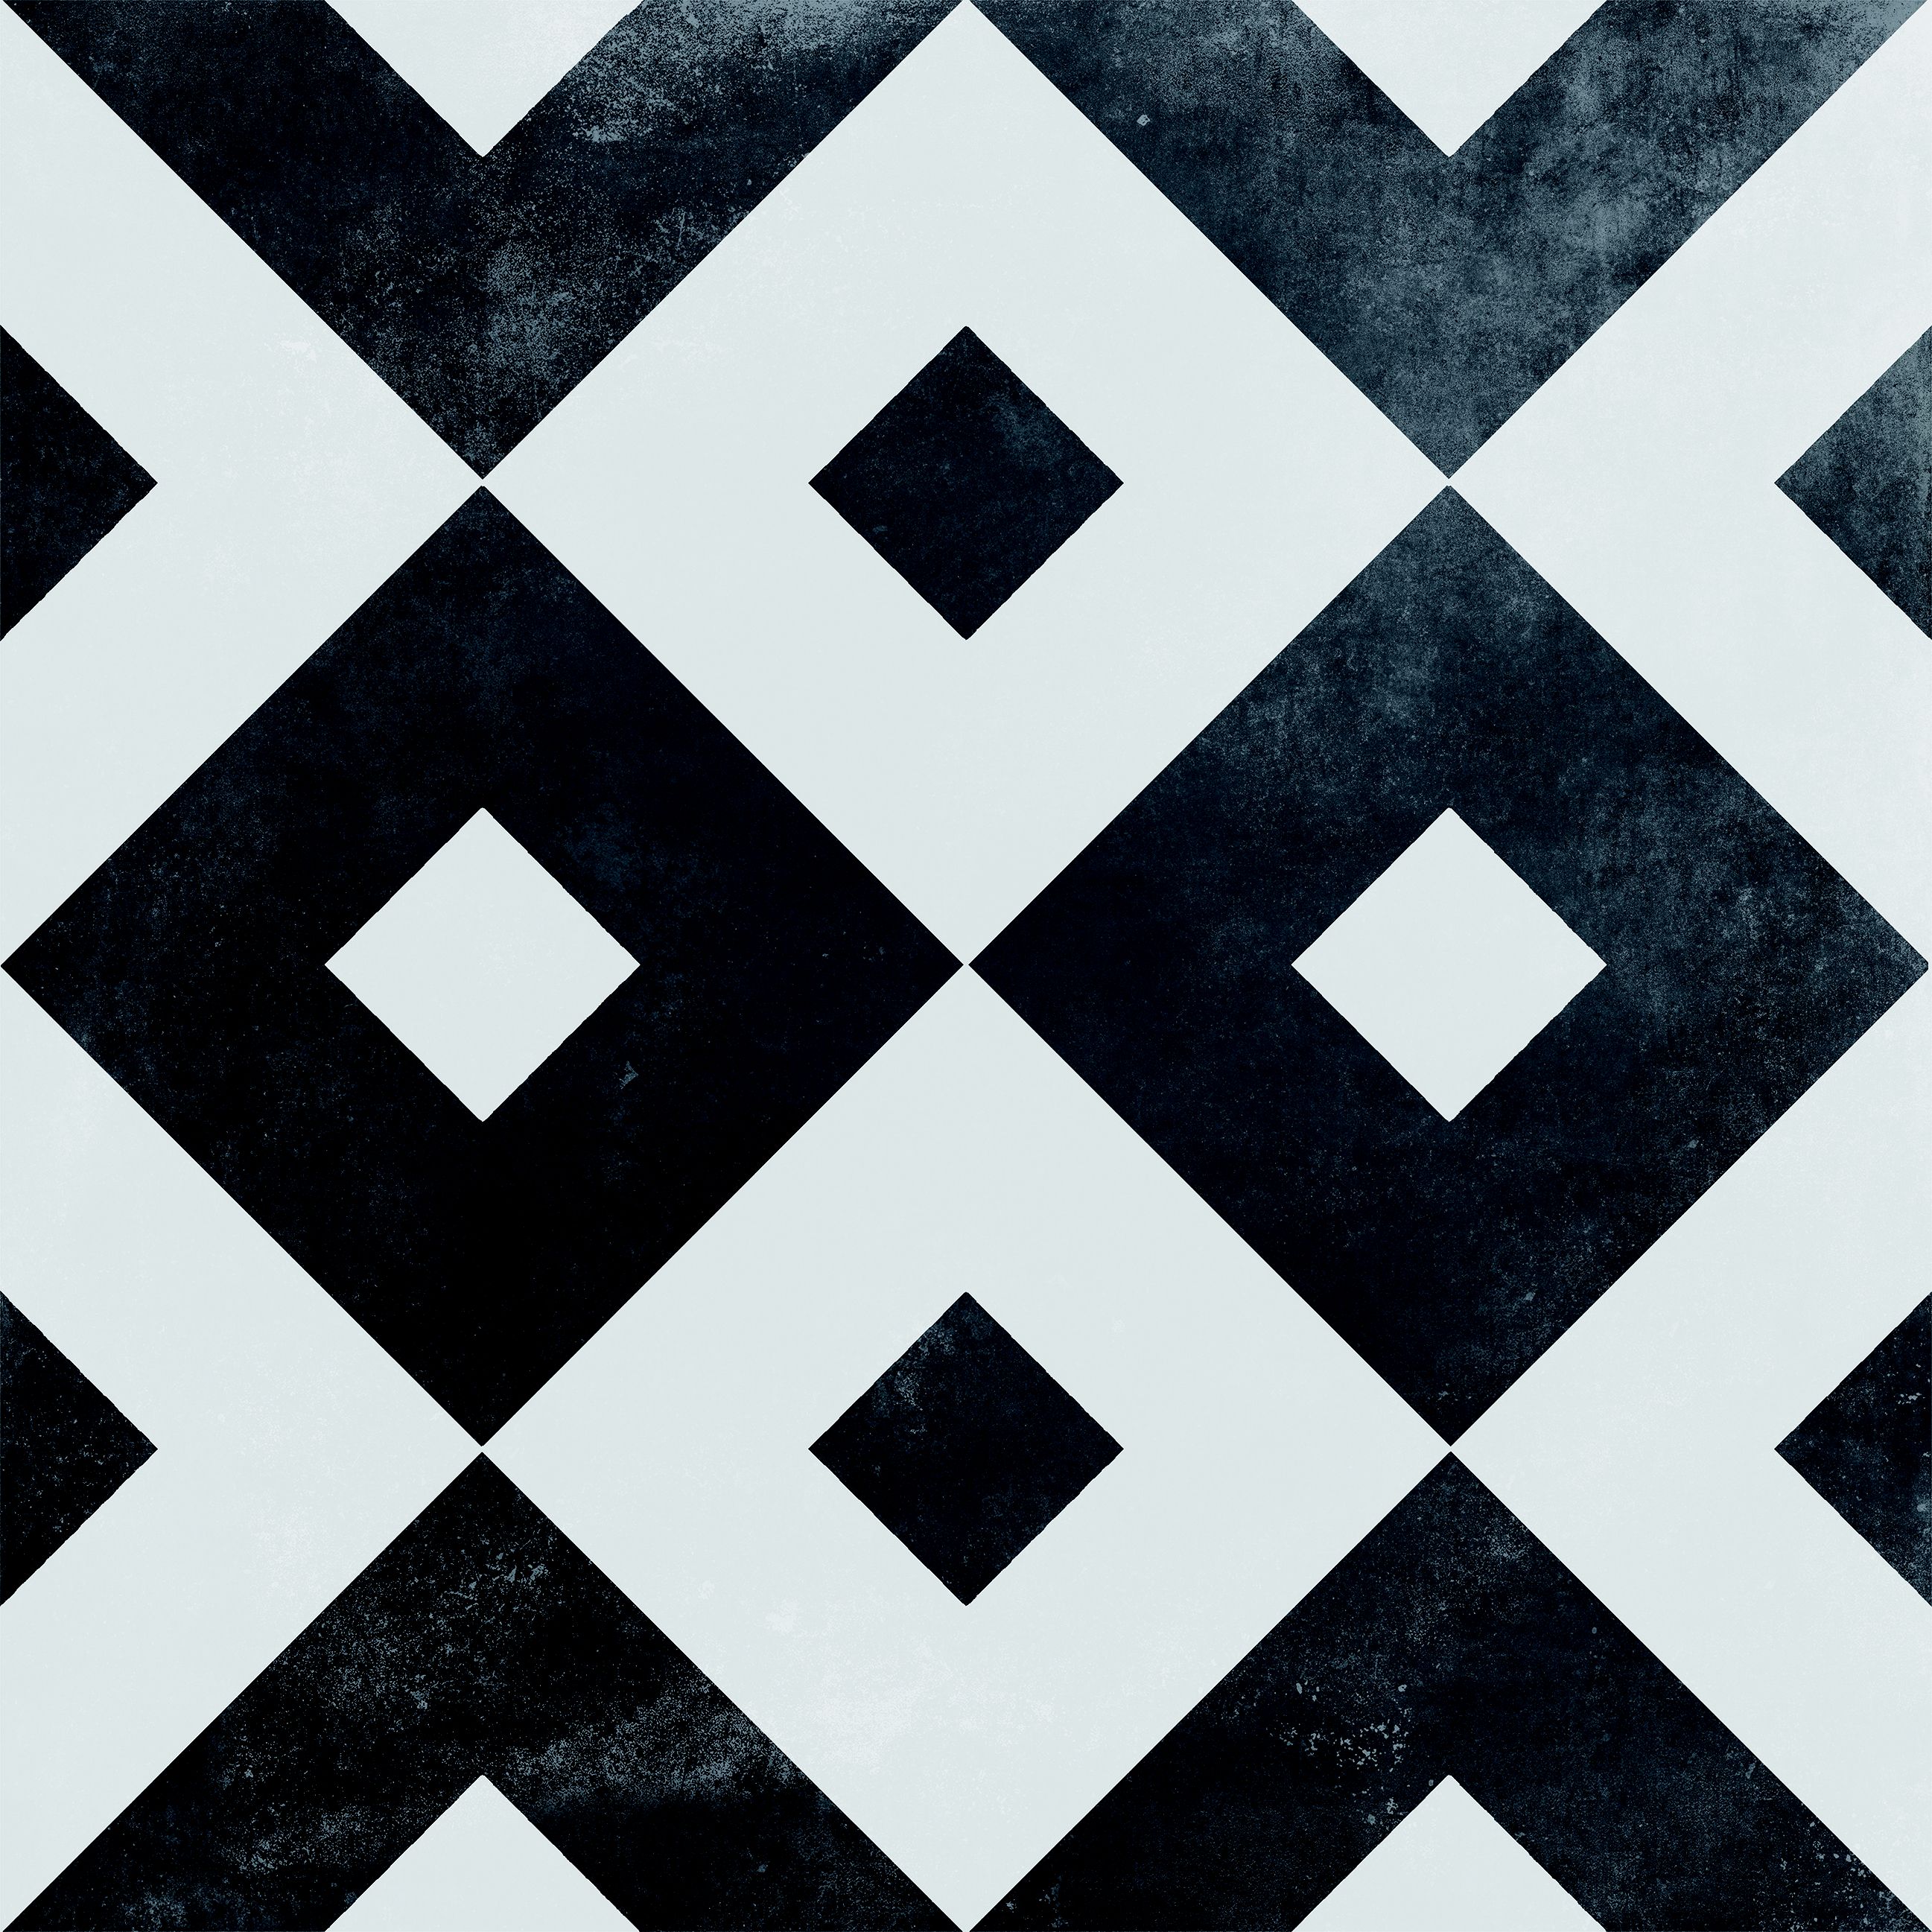 Radford Black & white Matt Patterned Porcelain Outdoor Floor Tile, Pack of 2, (L)604mm (W)604mm